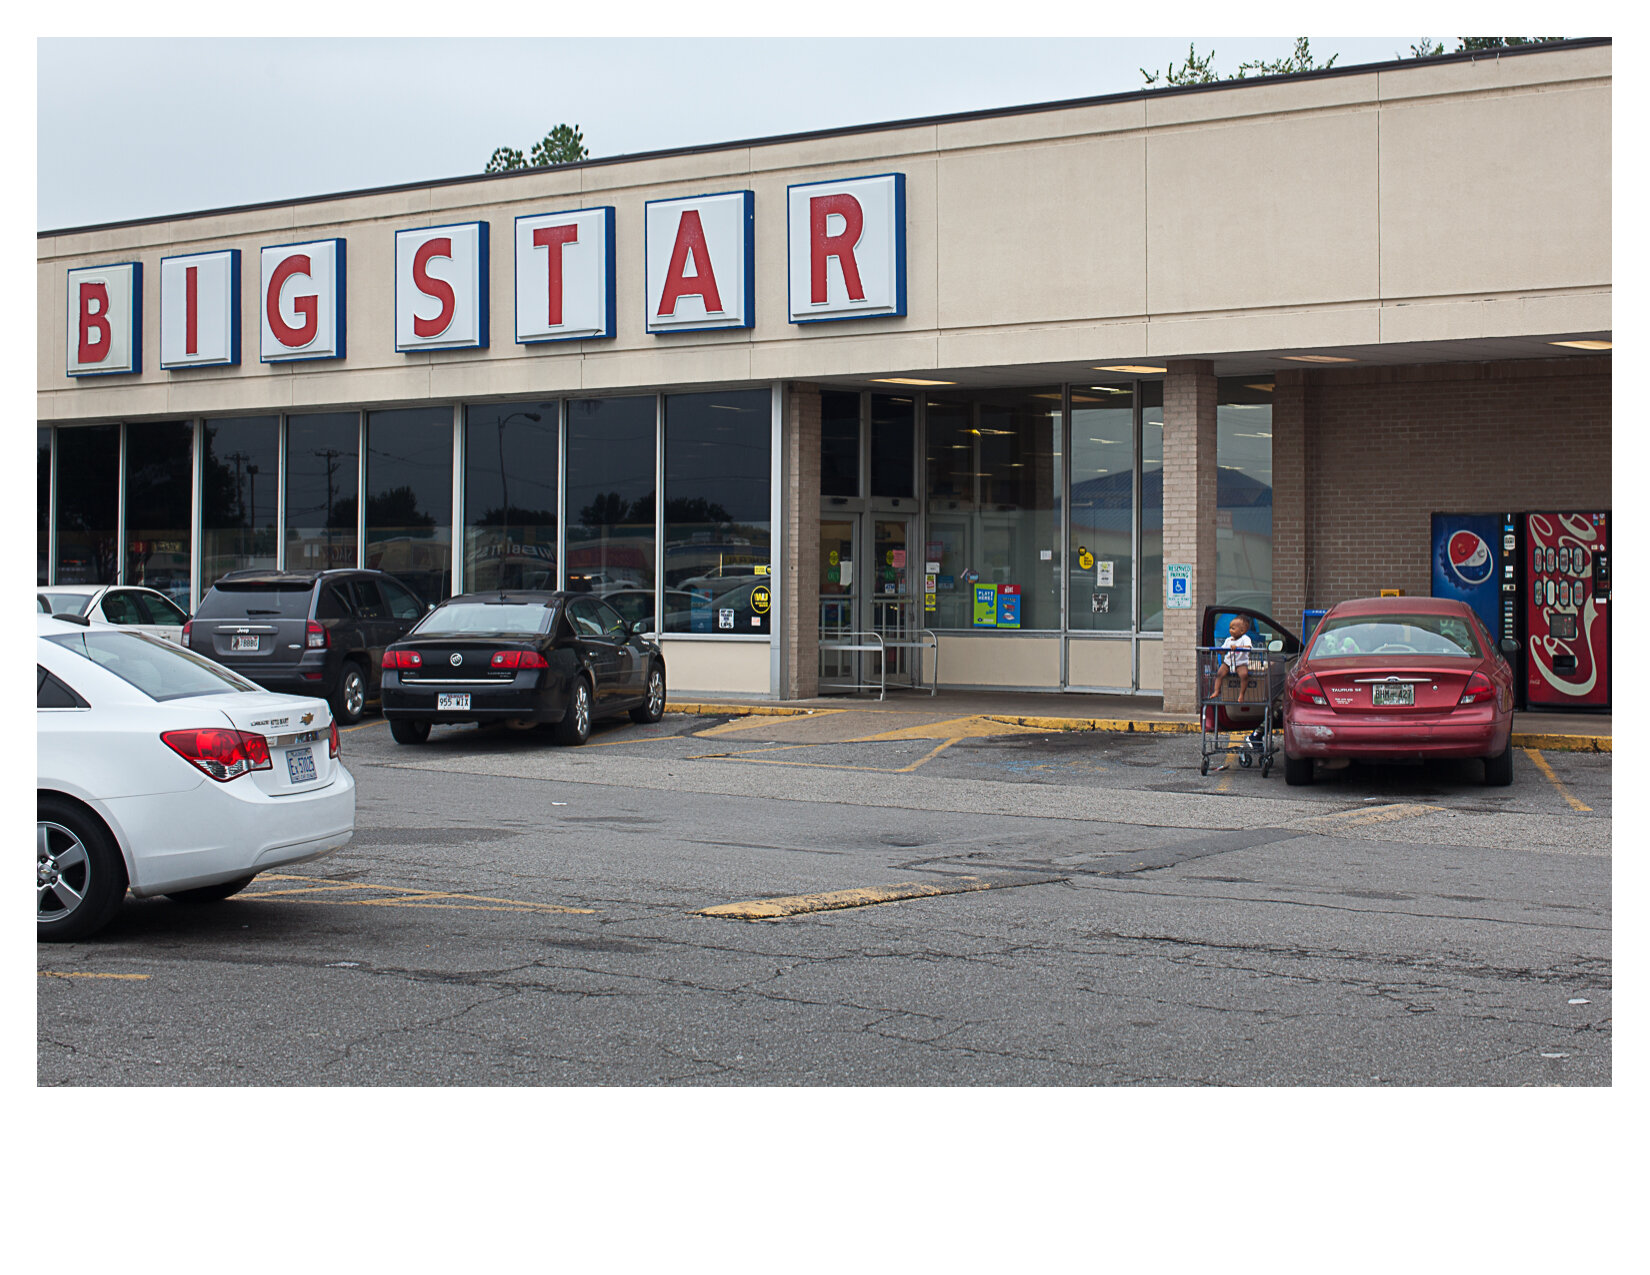 Outside the BIg Star Supermarket, West Memphis, AR